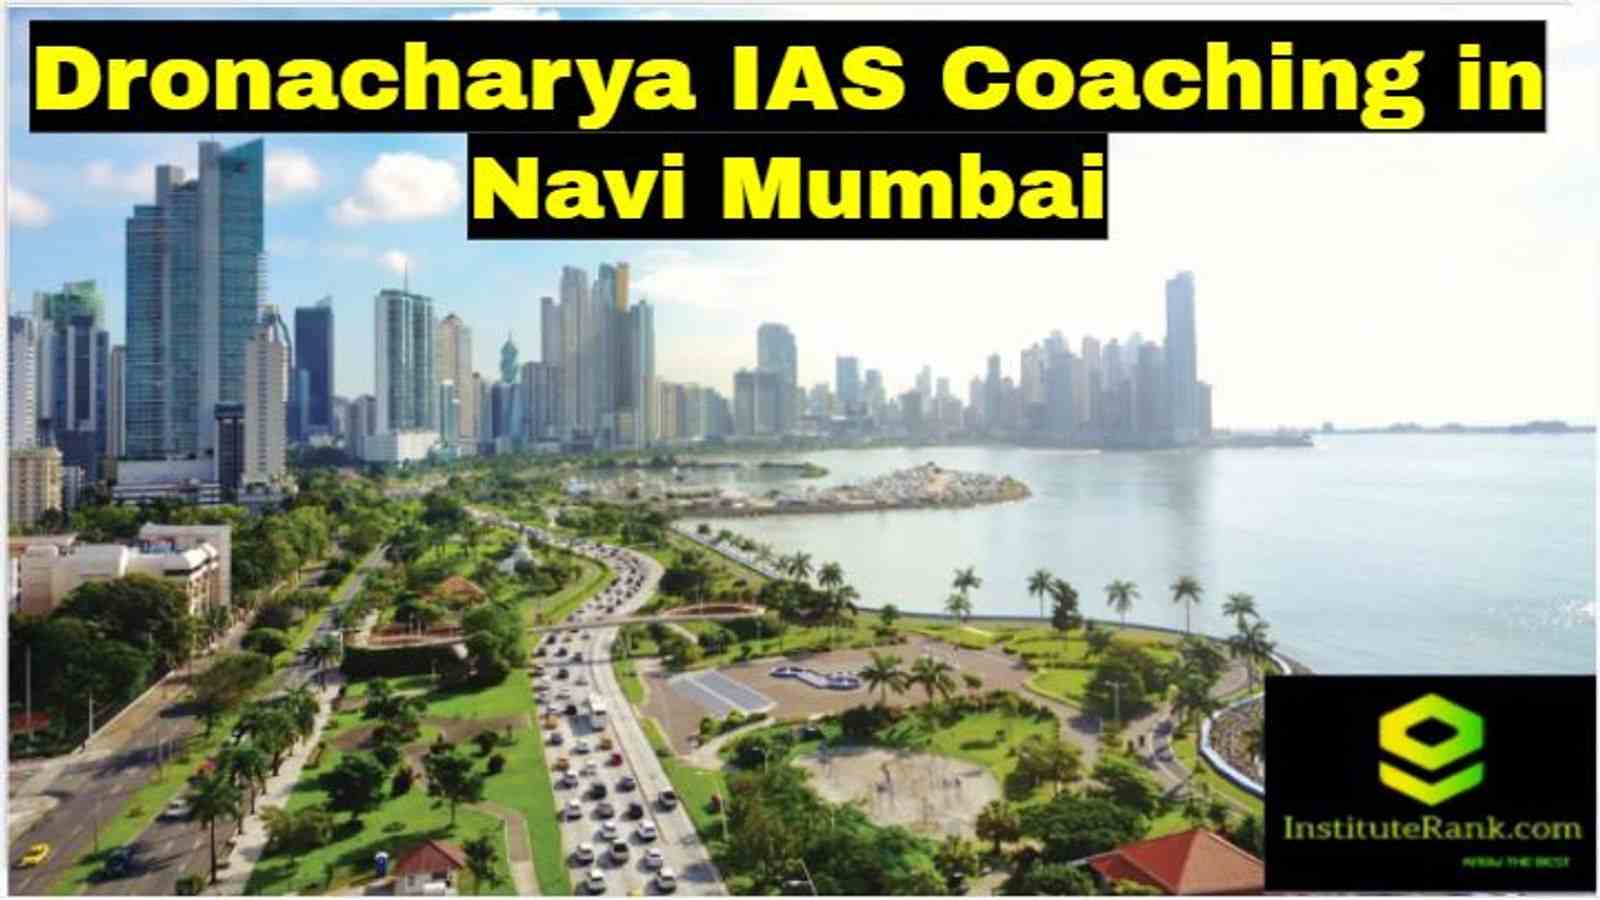 Dronacharya IAS Coaching in Navi Mumbai